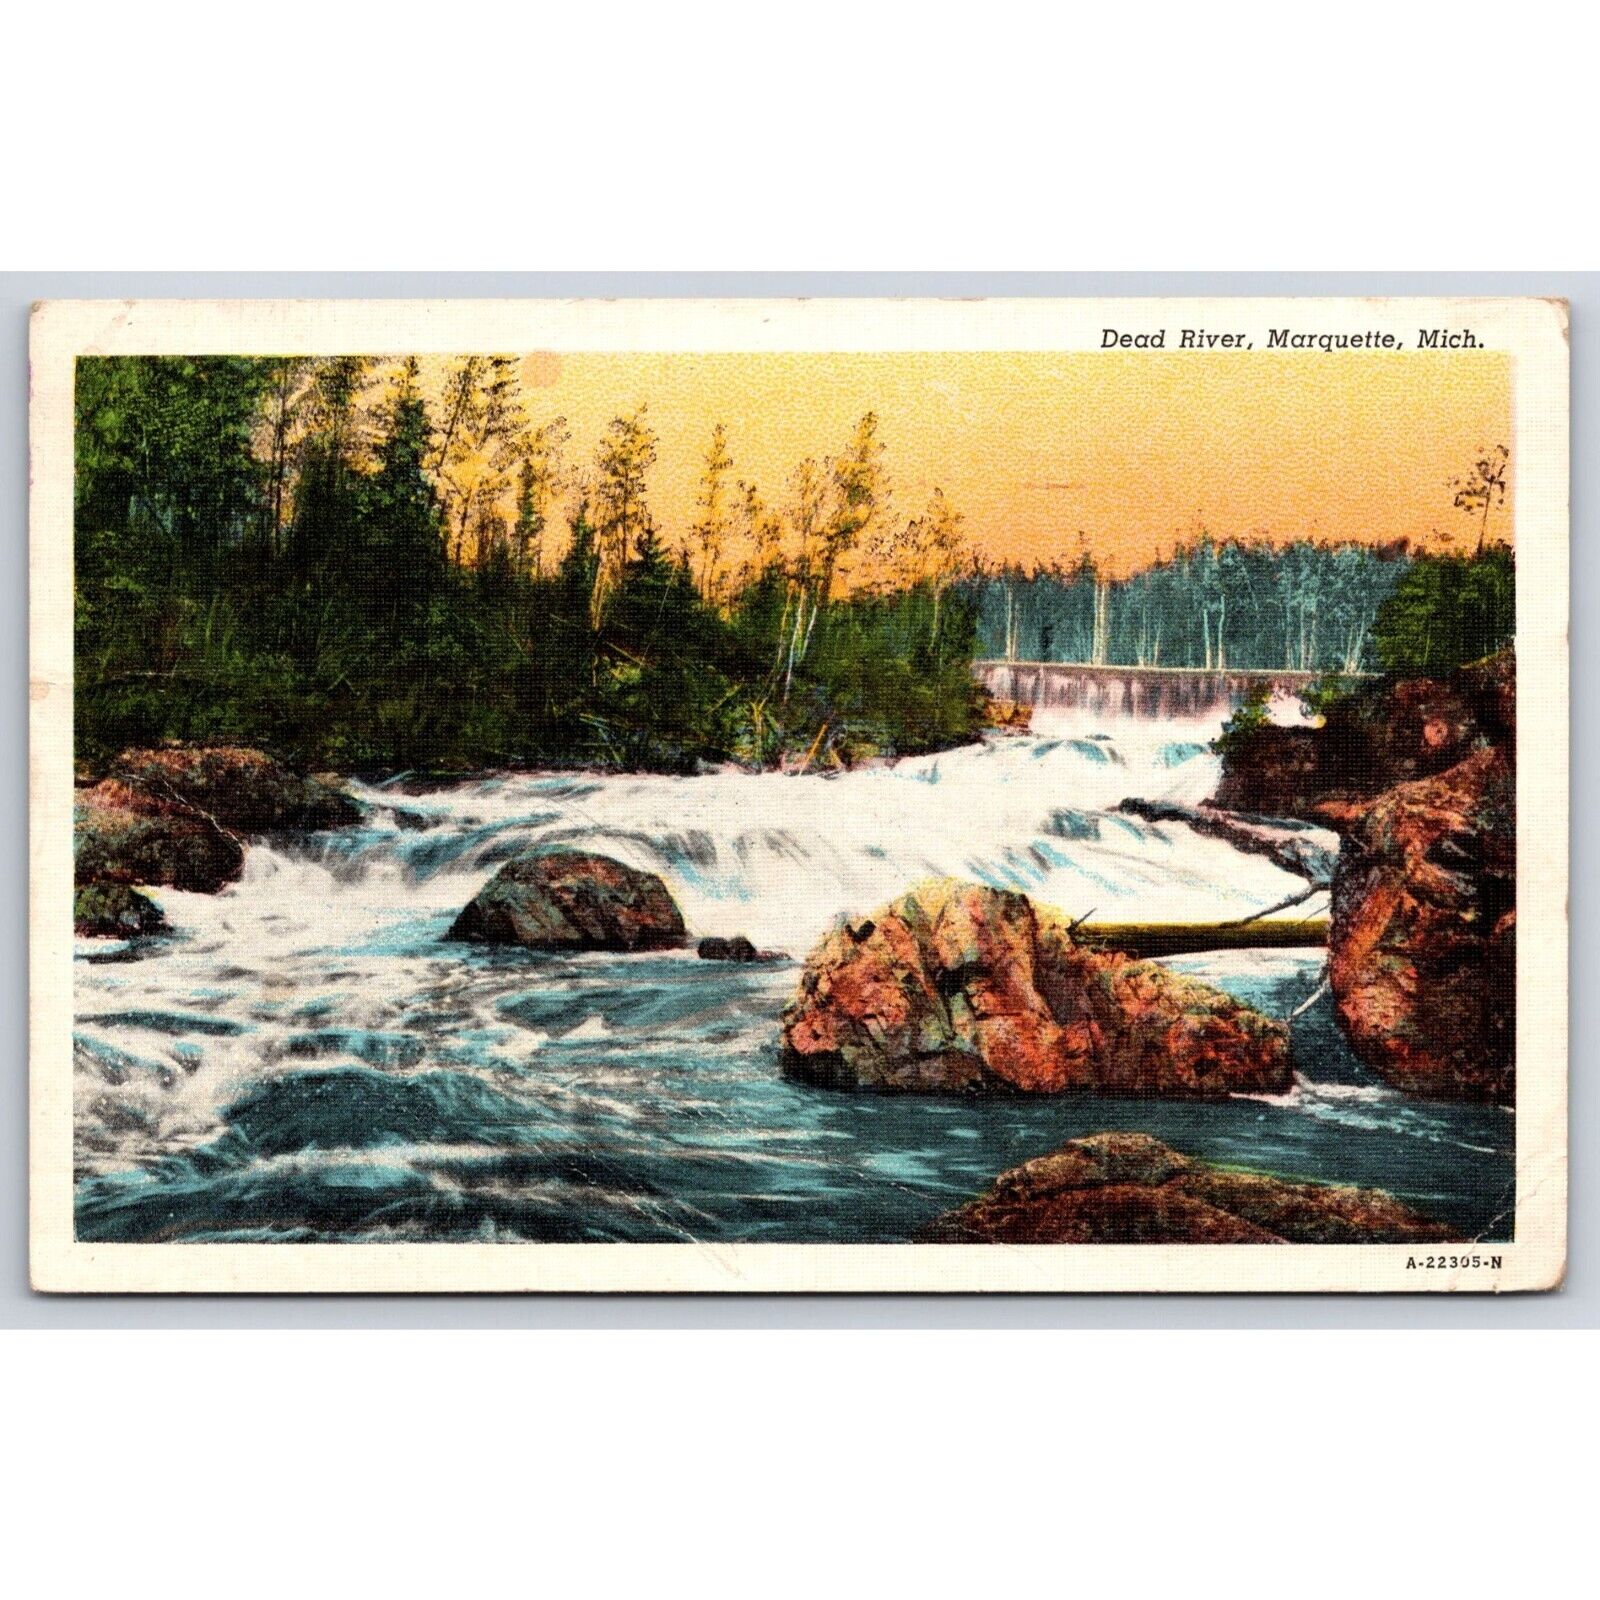 Vintage Postcard Dead River Marquette Michigan Scenic Waterfall View 1946